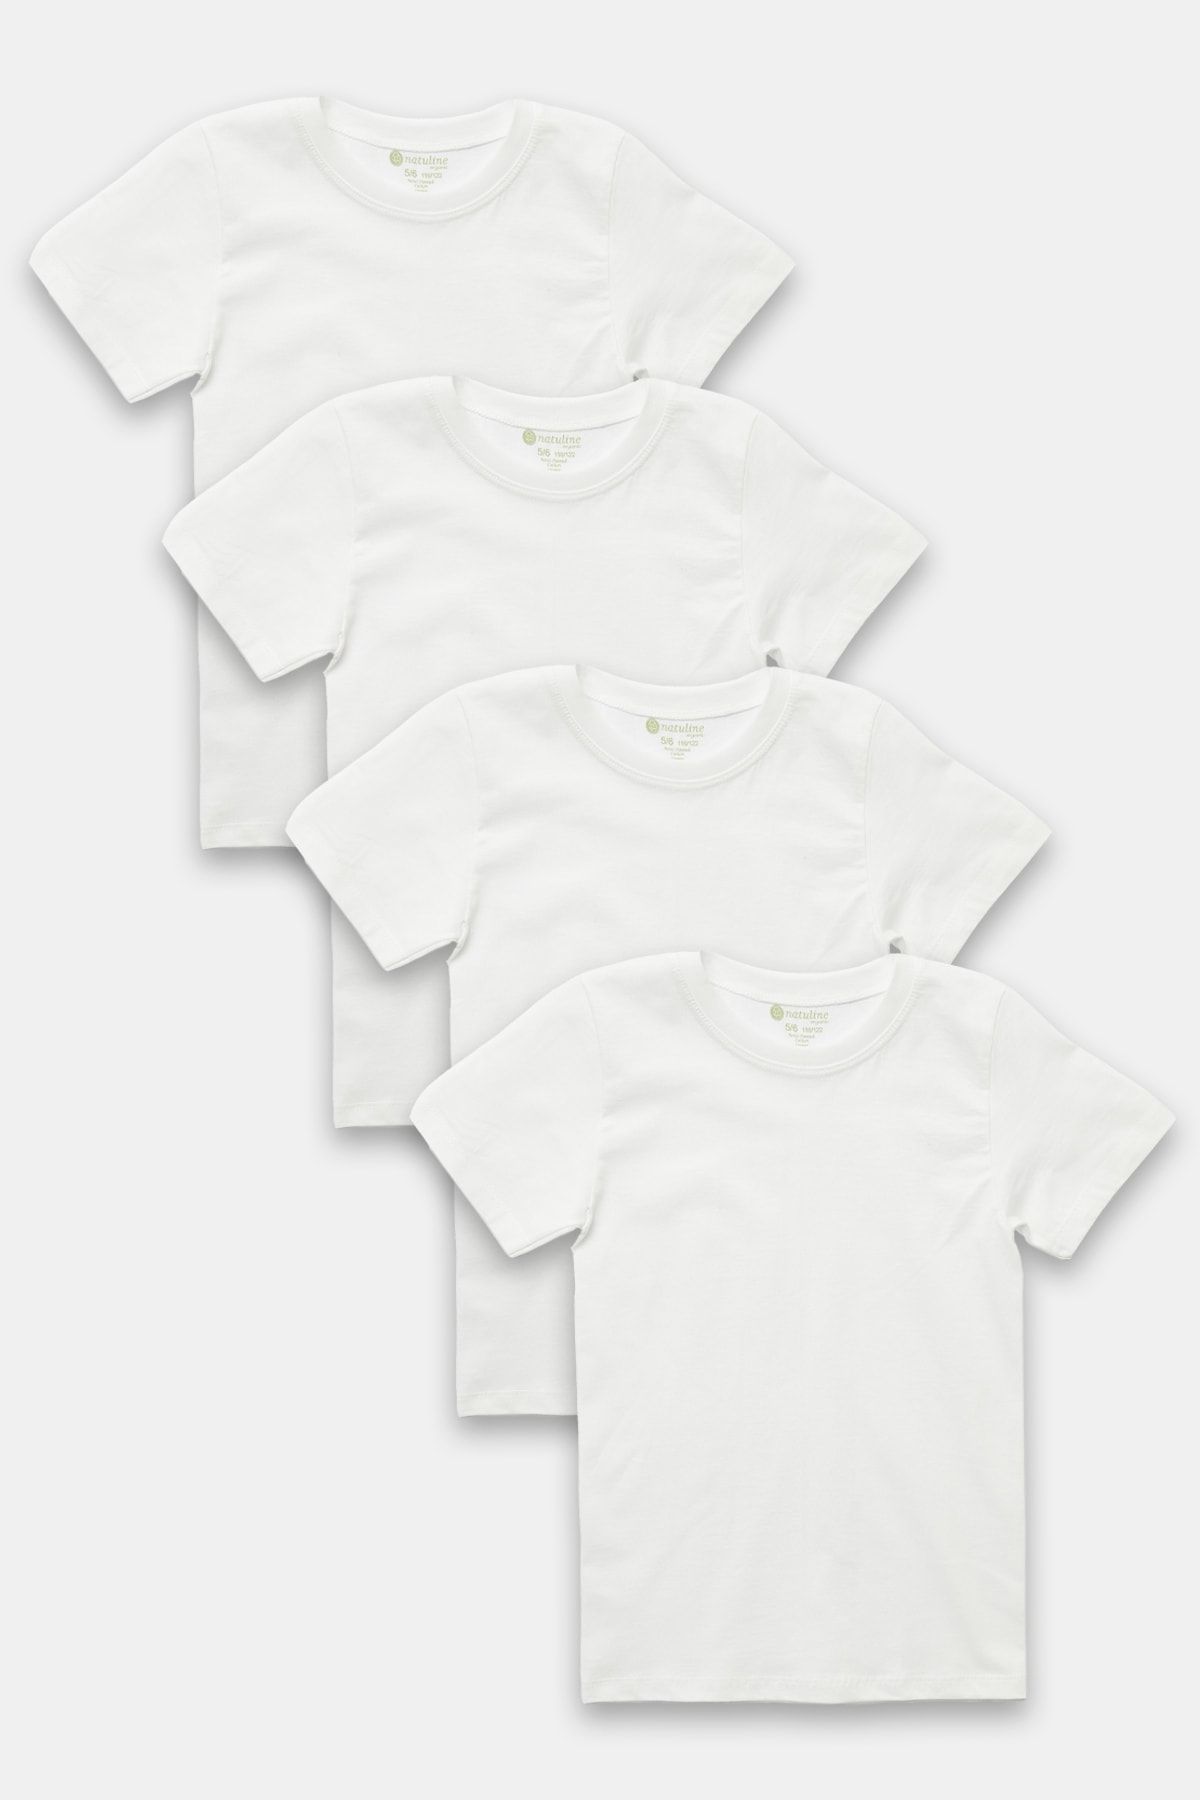 natuline Erkek Çocuk Organik Pamuk Penye 4'lü Paket T-shirt